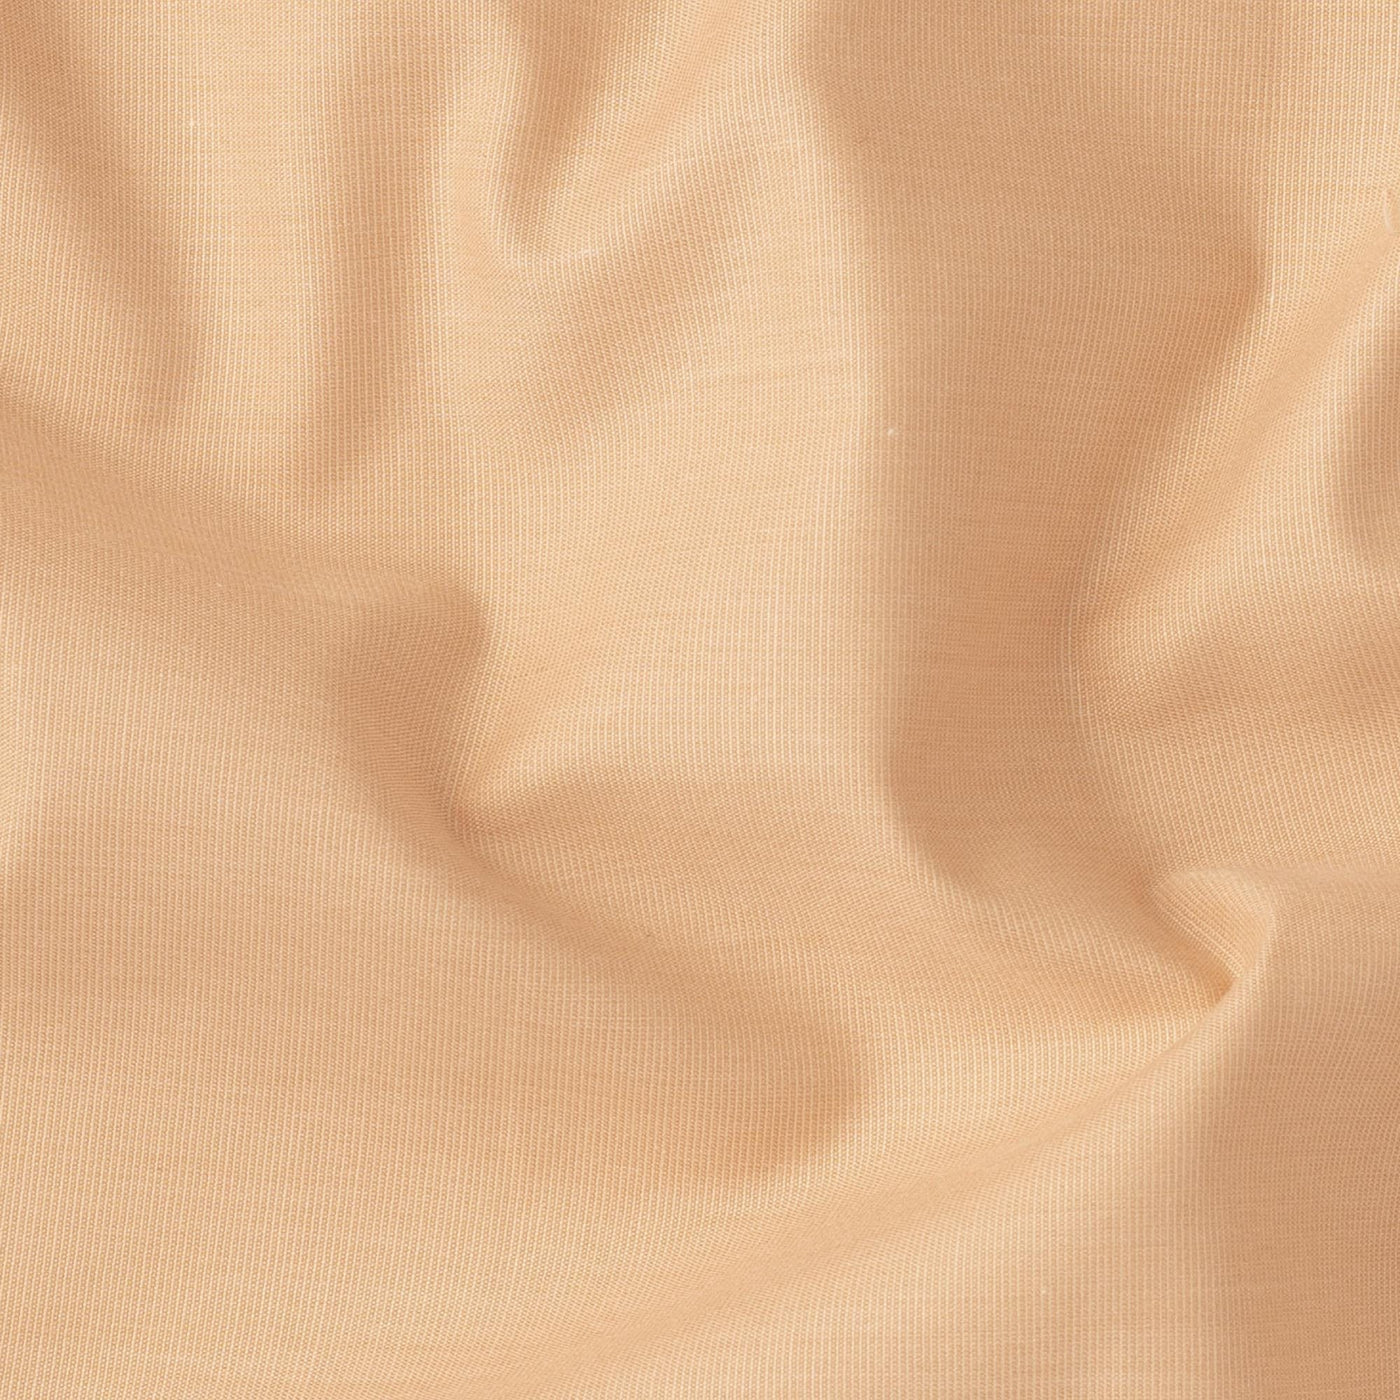 Fabric Pandit Cut Piece (CUT PIECE) Beige Textured Cotton Fabric (Width 58 inch)